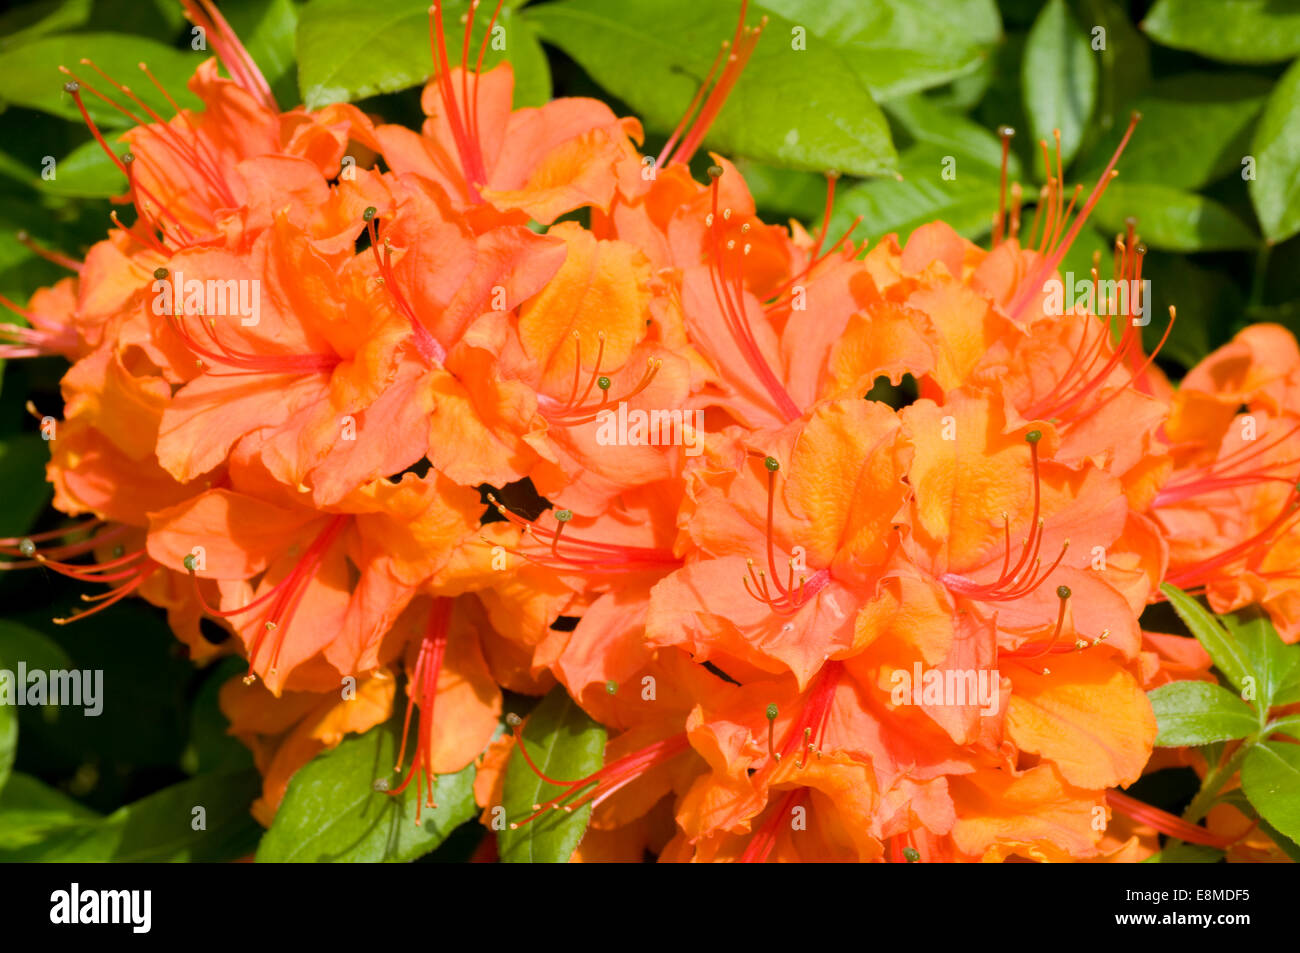 Orange Calendulaceum or Flammeum Rhododendron flowers in sunlight Stock Photo